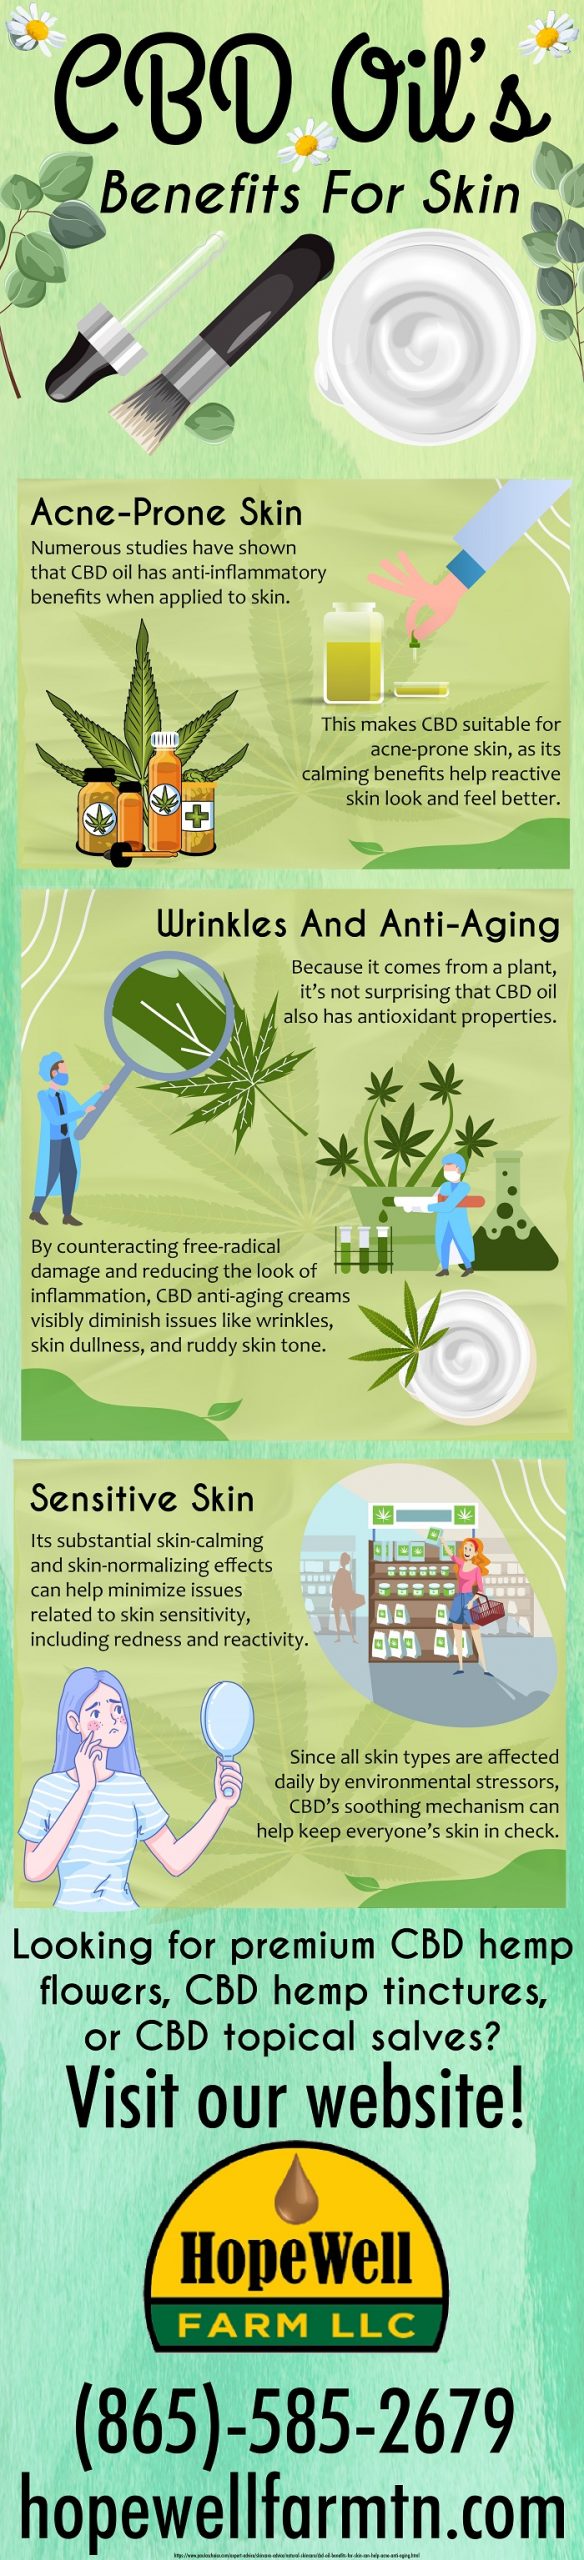 CBD Oil's Benefits for Skin - An Infographic - HopeWell Farm LLC